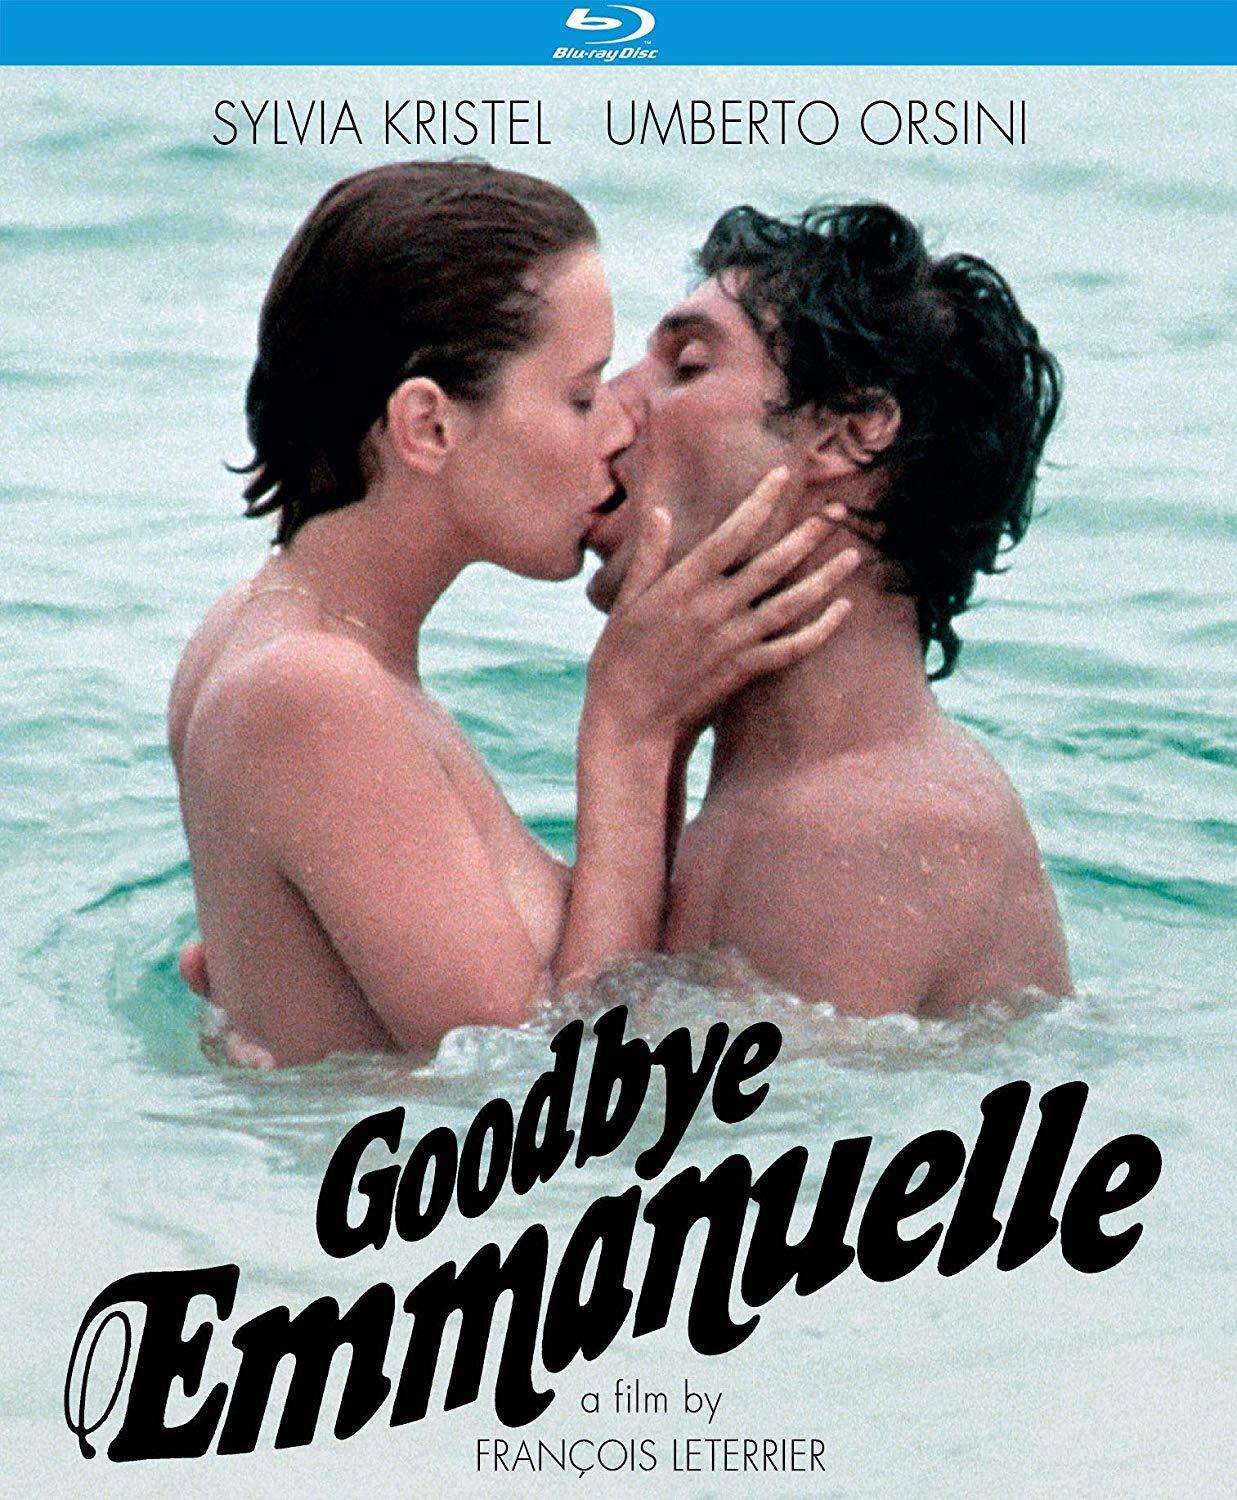 [艾曼纽3].Goodbye.Emmanuelle.3.1977.BluRay.1080p.AVC.LPCM.2.0-DIY   18.51G-1.jpg